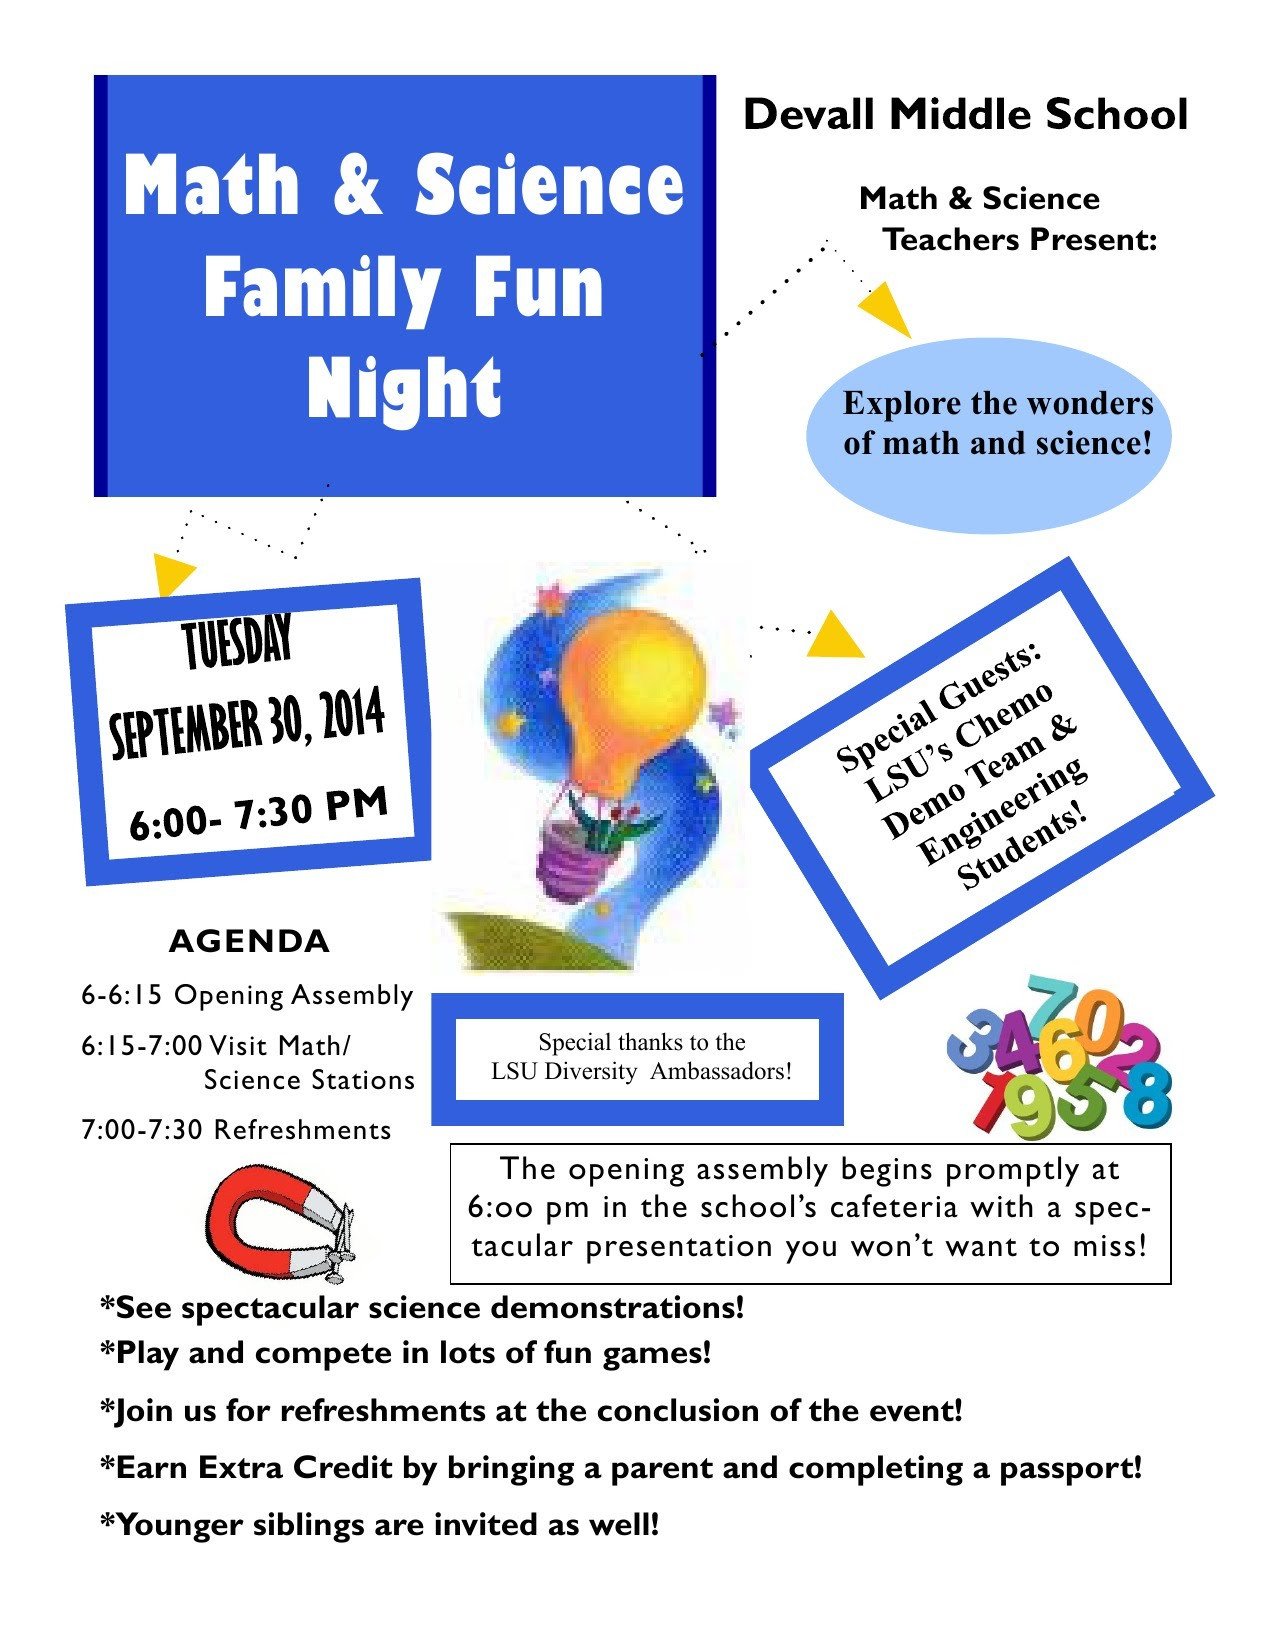 Family Math Night Flyers Math and Science Family Fun Night Devallmiddleschool